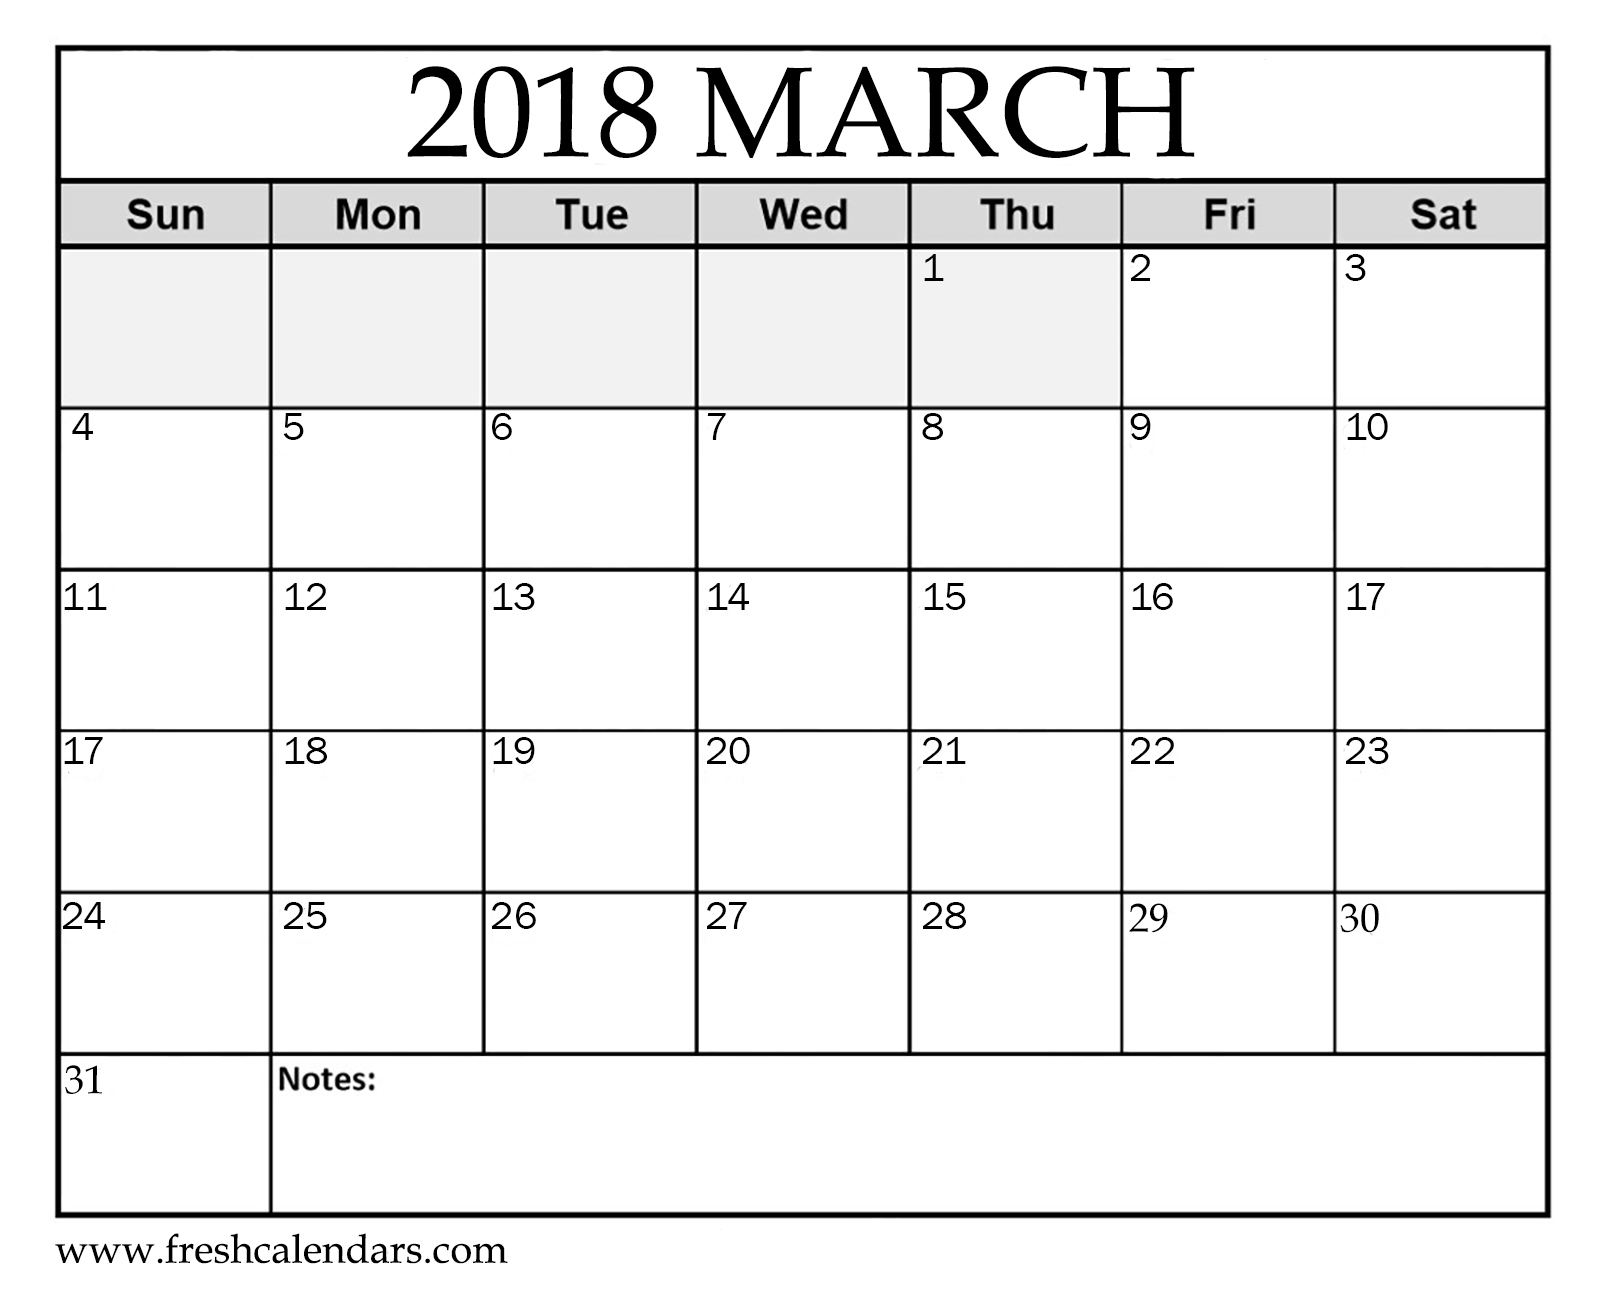 March 2018 Calendar Pdf